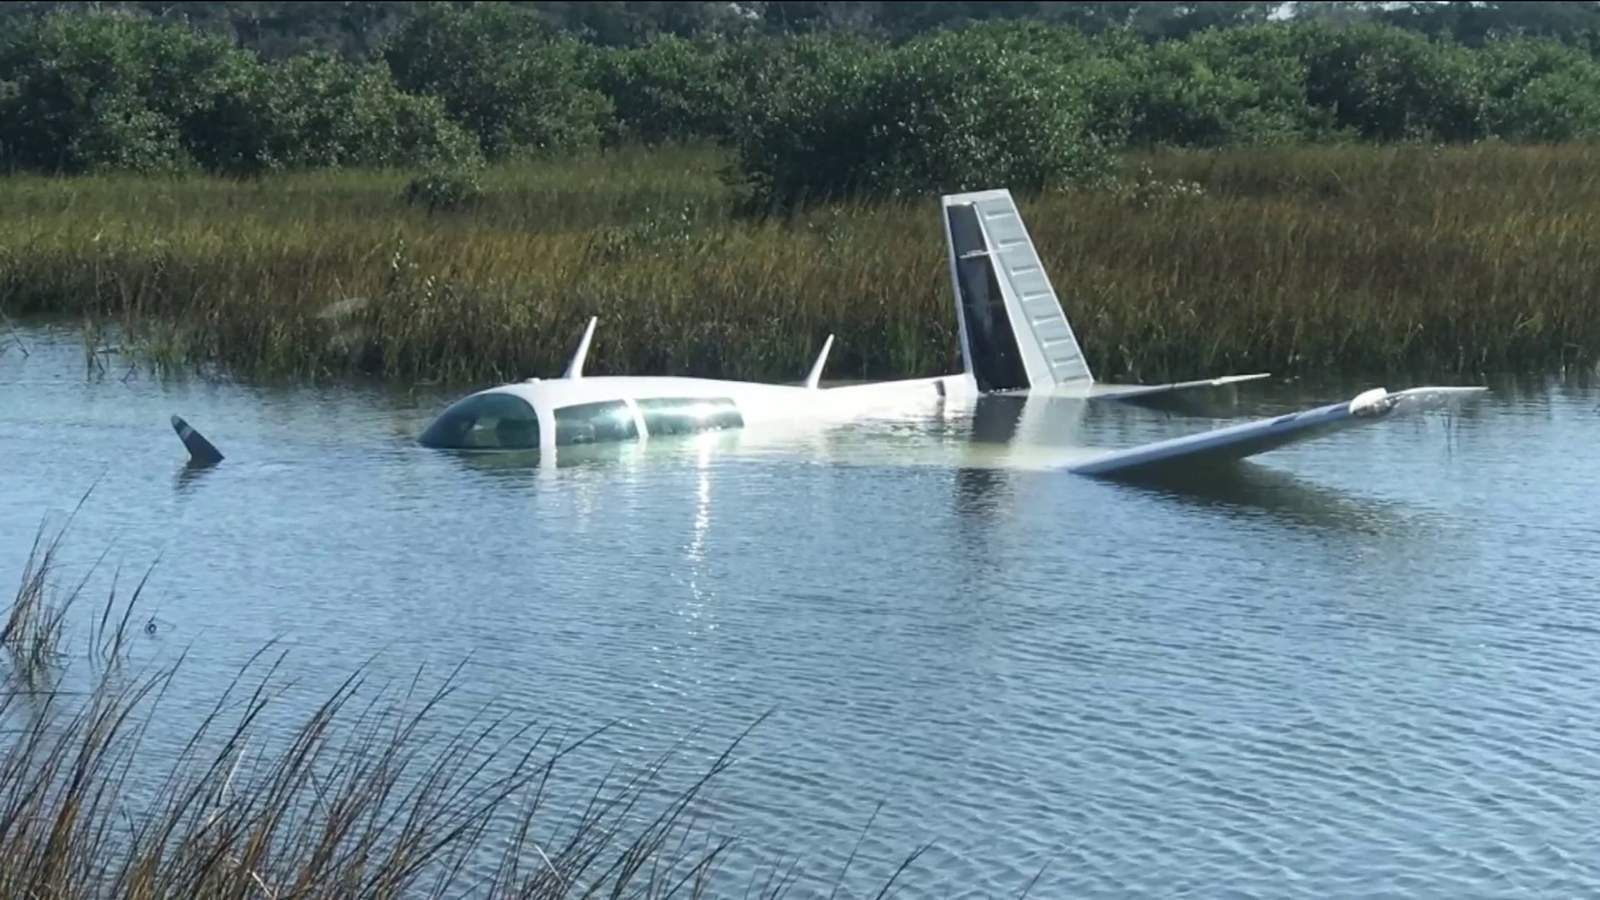 Small plane crash lands into St. Augustine marsh